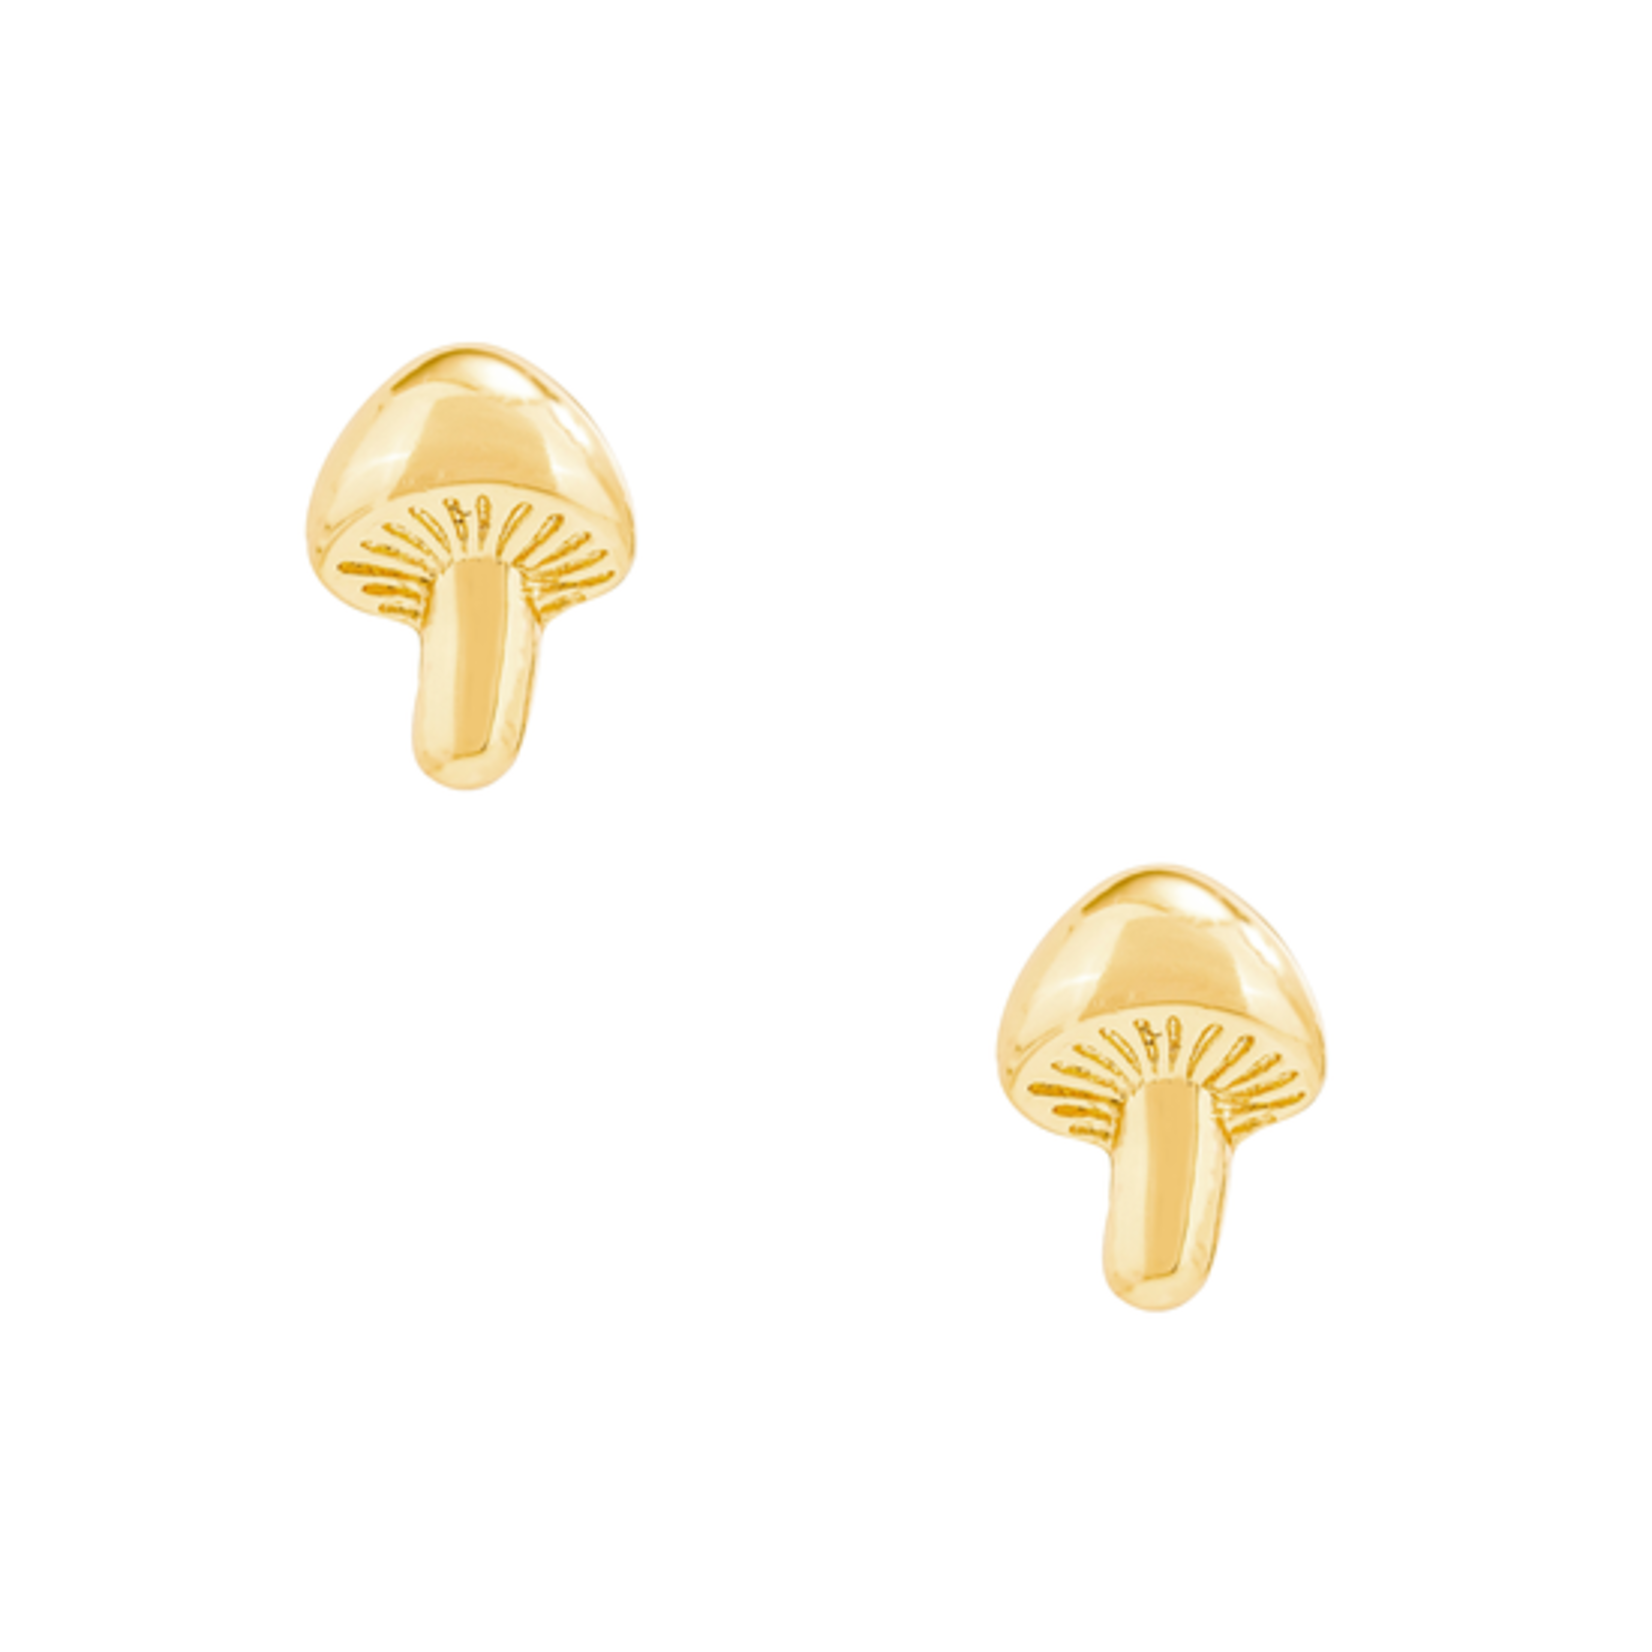 Mod + Jo Mushroom Stud Earrings